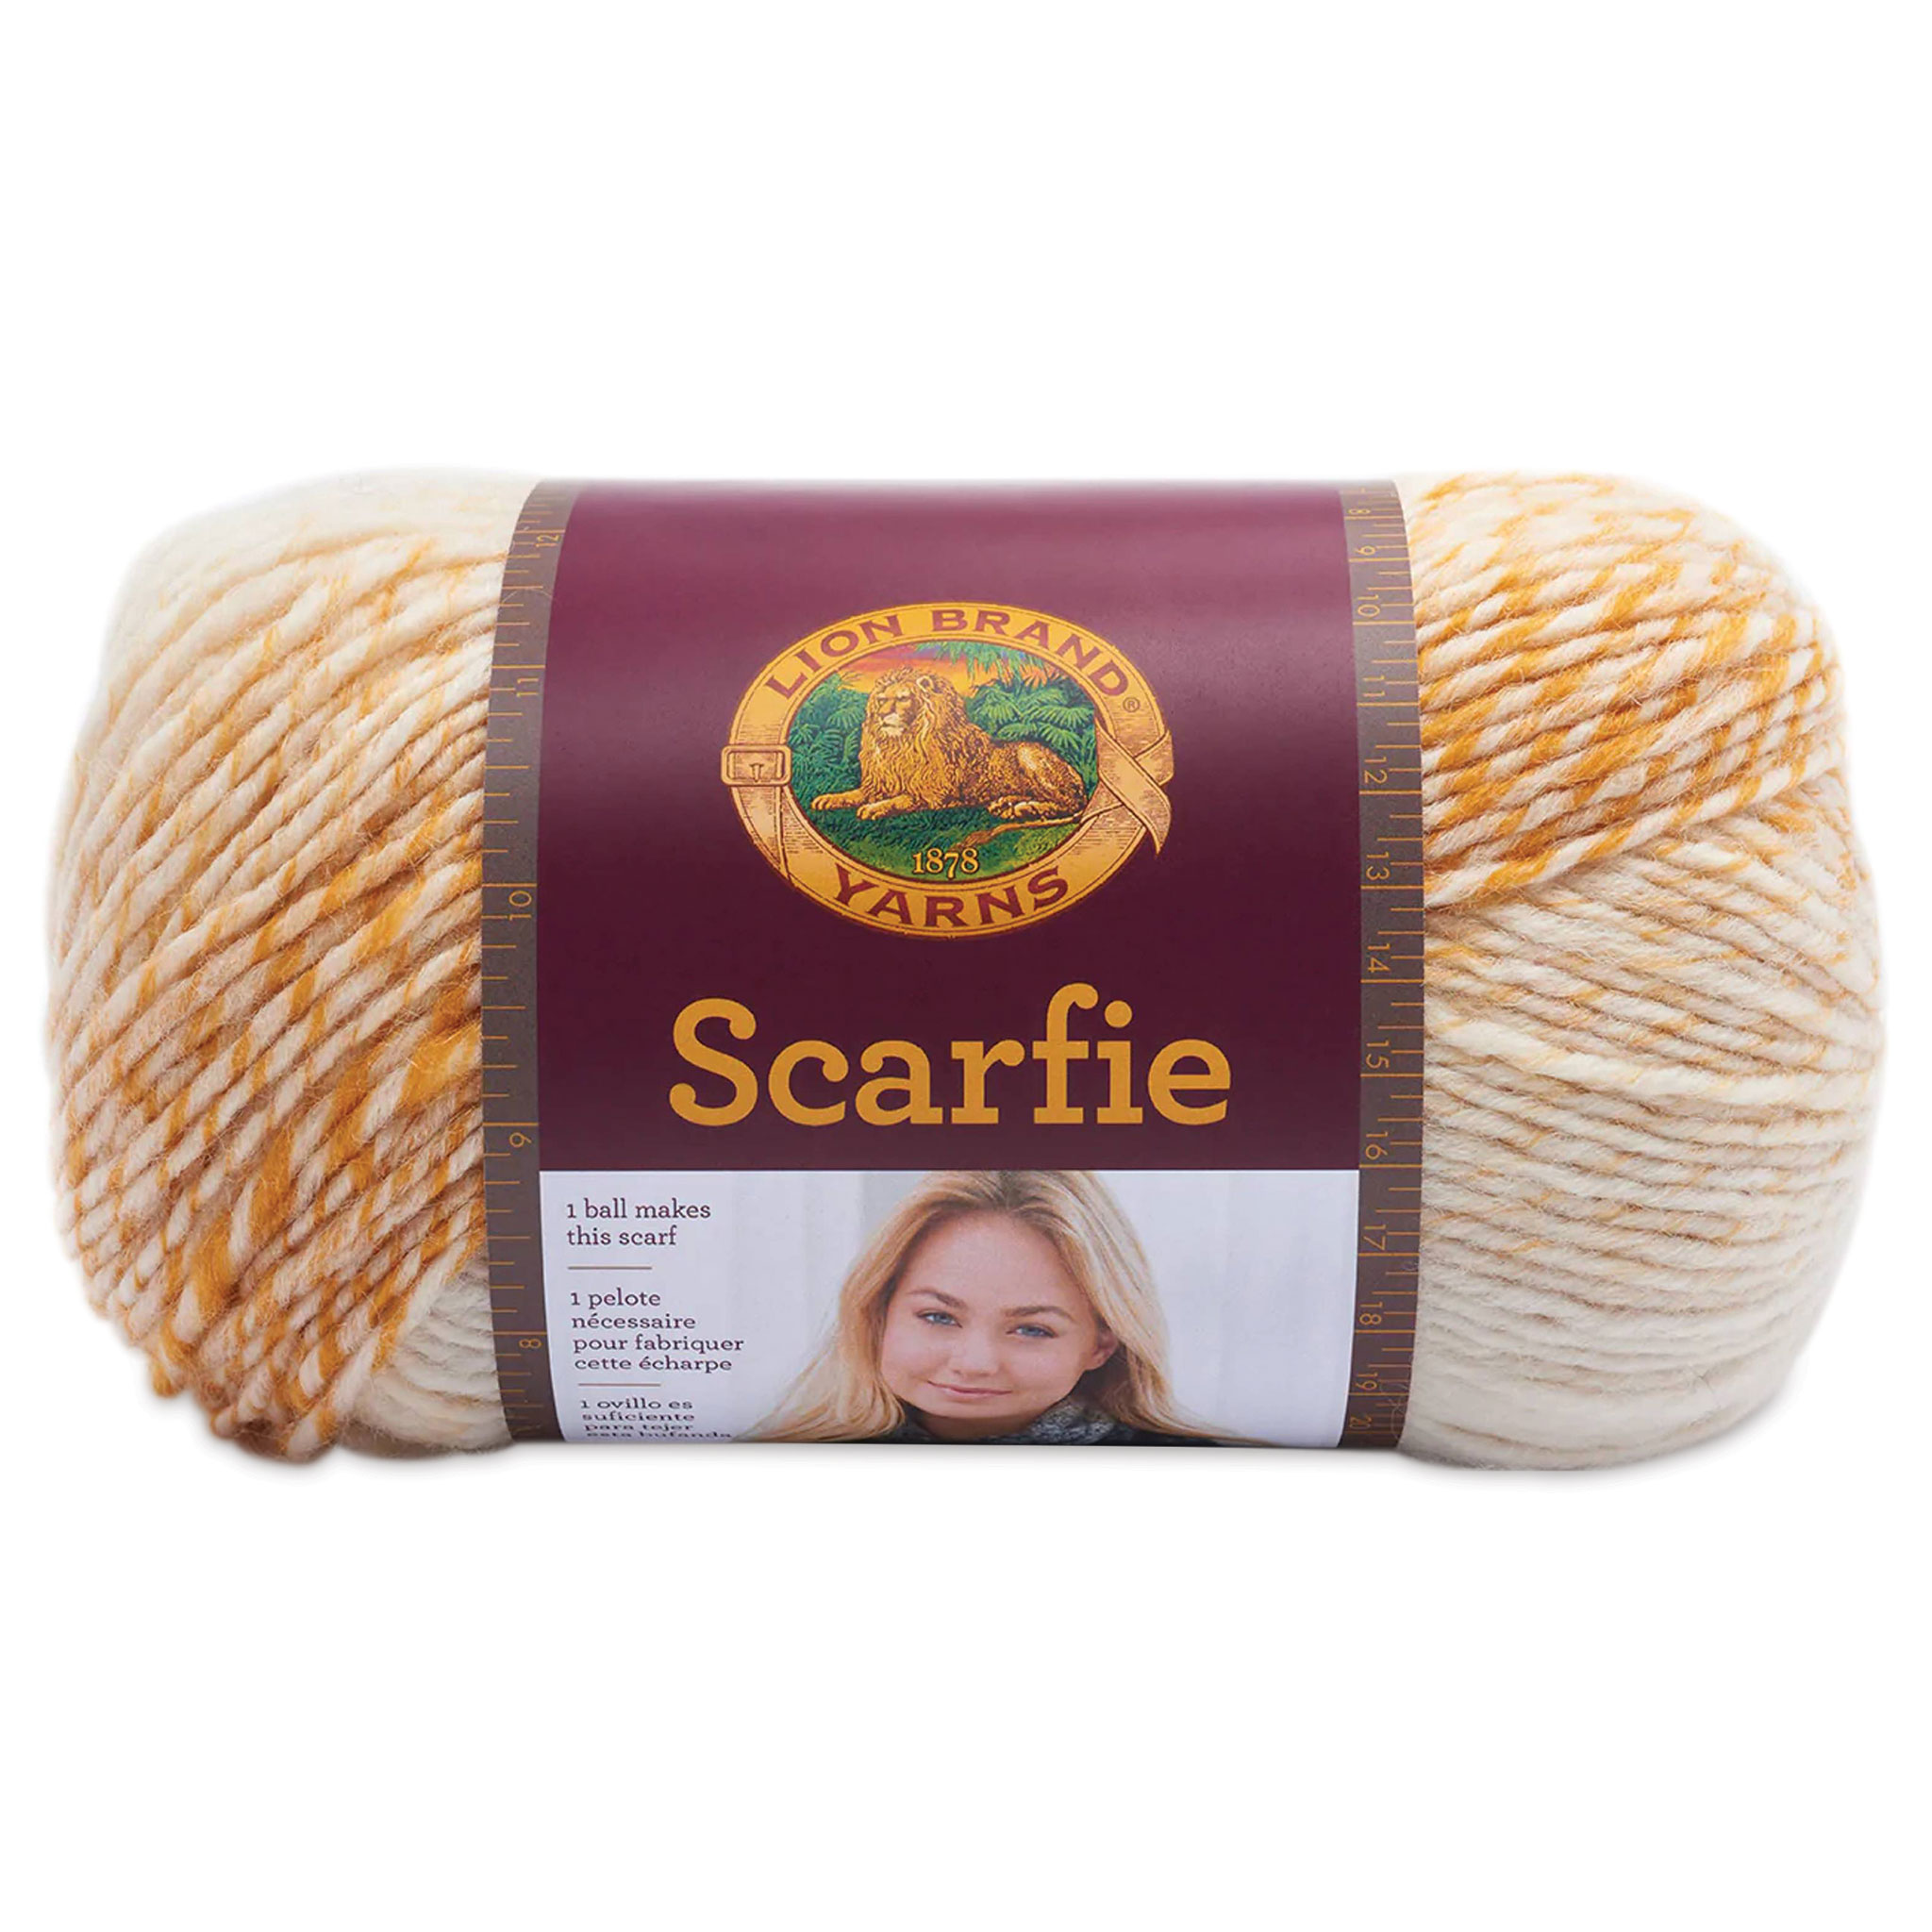 Lion Brand Scarfie Yarn - Cream/Teal, 312 yds